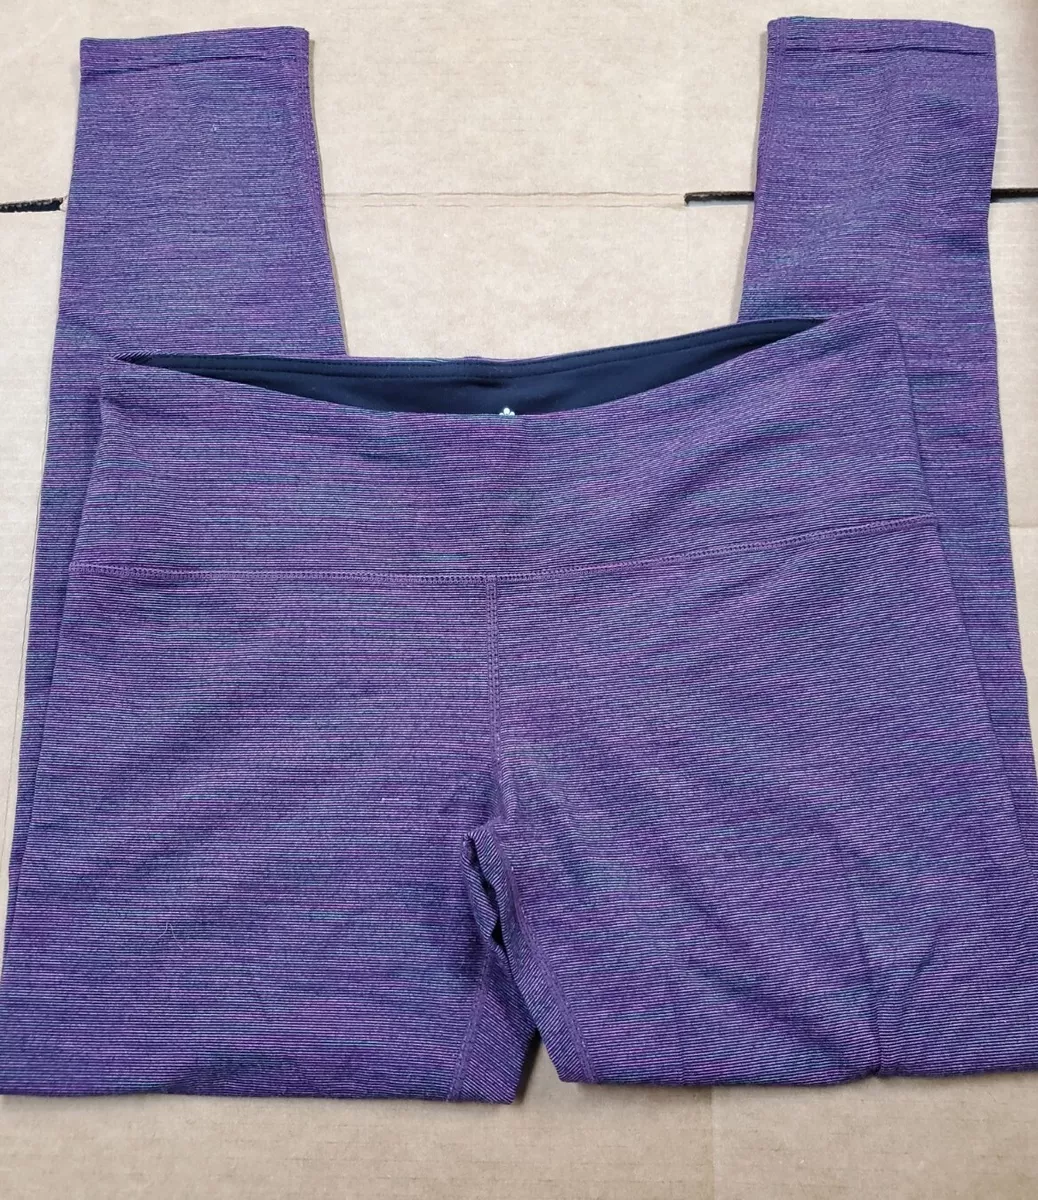 Tuff Athletics Leggings Women's Active Yoga Gym Pants Size Medium (F-9)